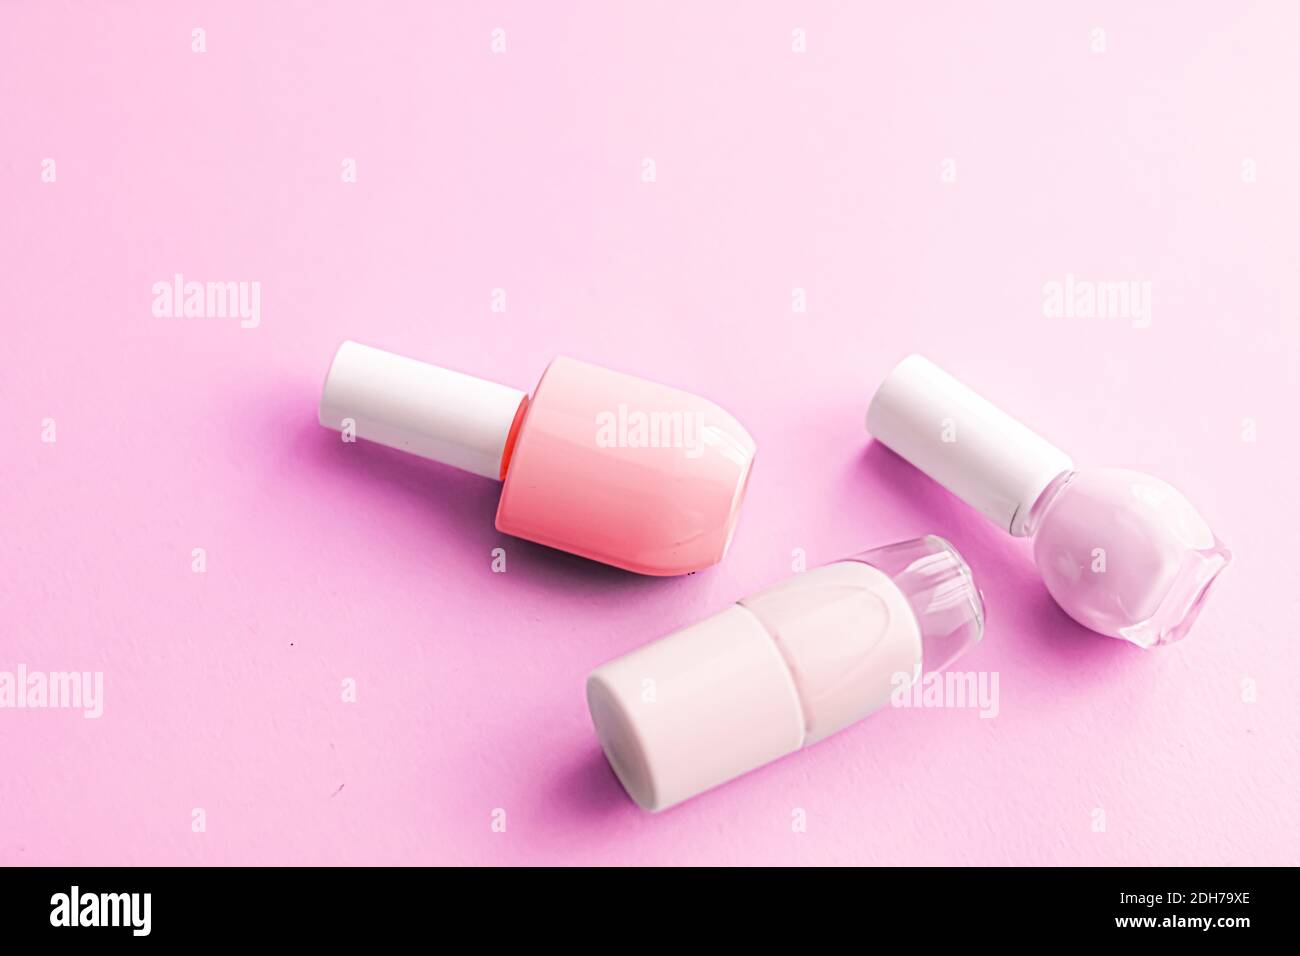 Nail polish bottles on pink background, beauty brand Stock Photo